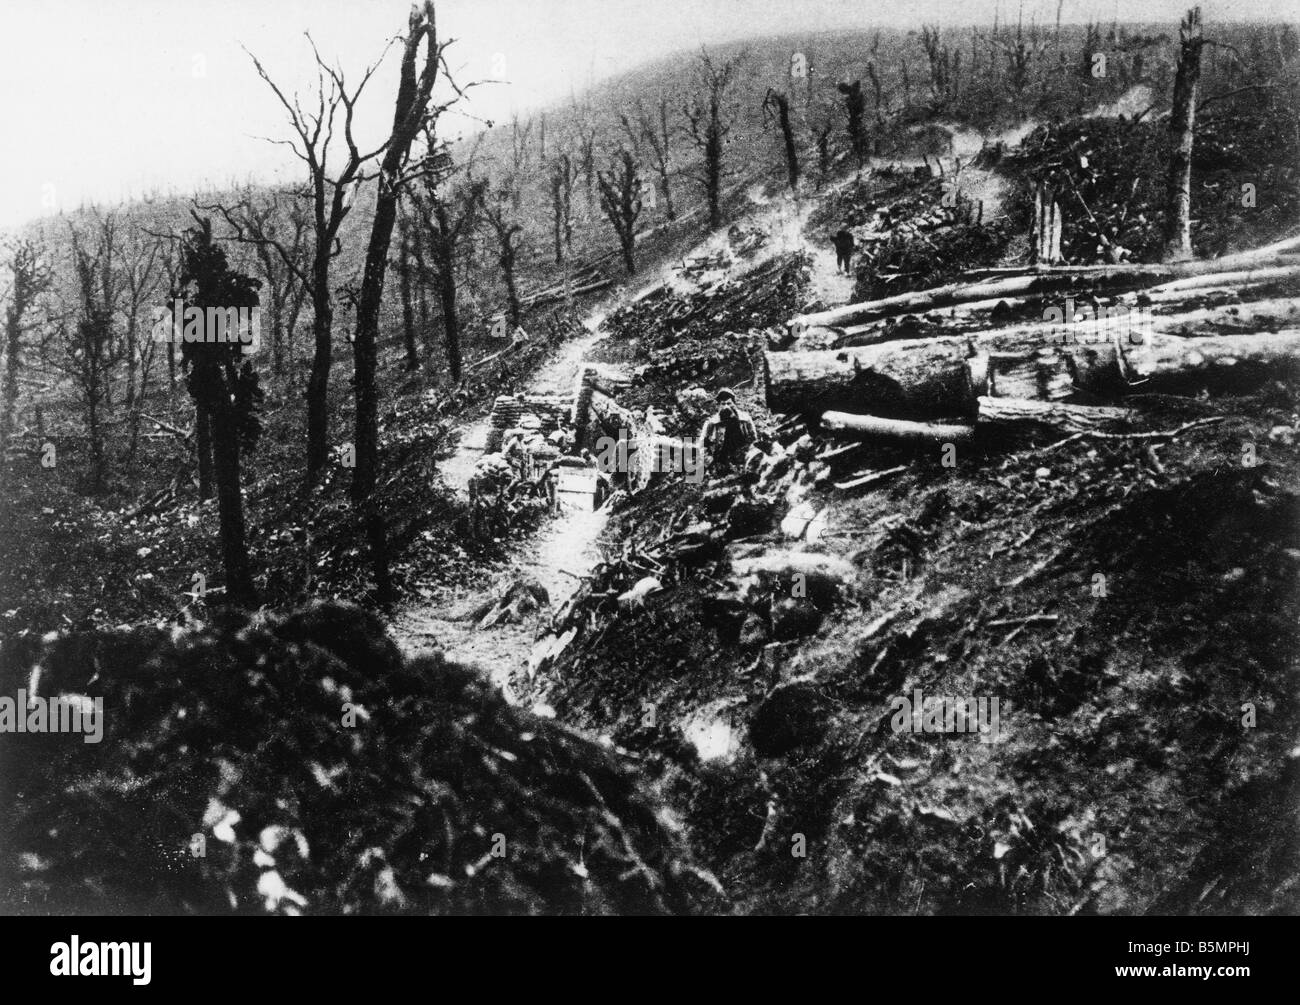 9 1916 10 24 A1 3 E Battle of Verdun 1916 World War 1 1914 18 Western Front Battle of Verdun 1916 The ravine Ravin de la Dame ca Stock Photo